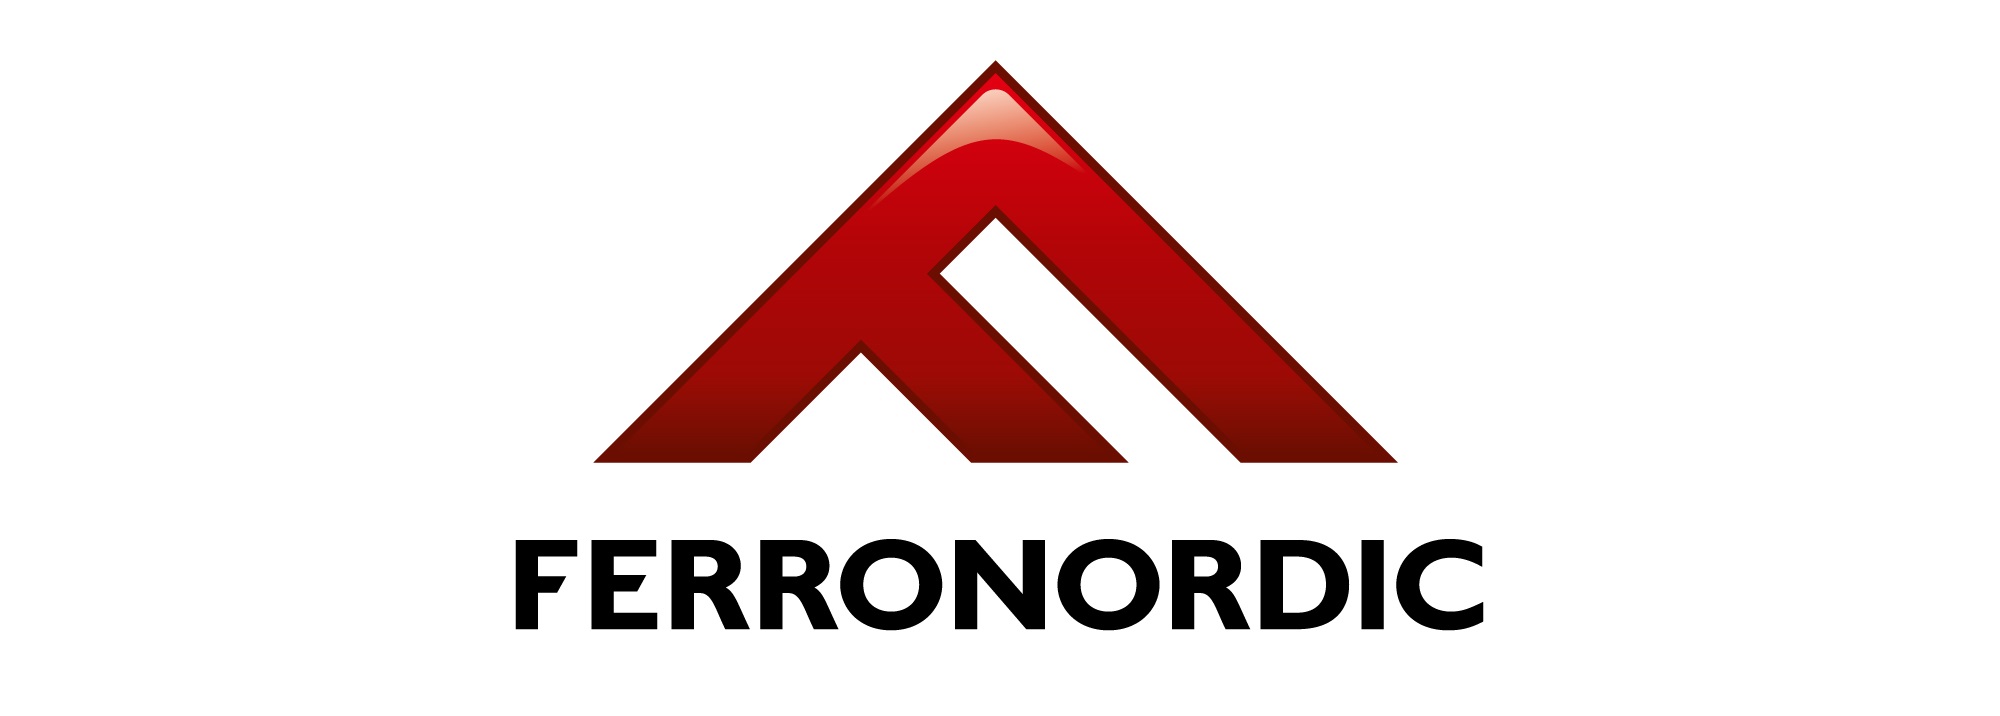 Ferronordic_logo.jpg